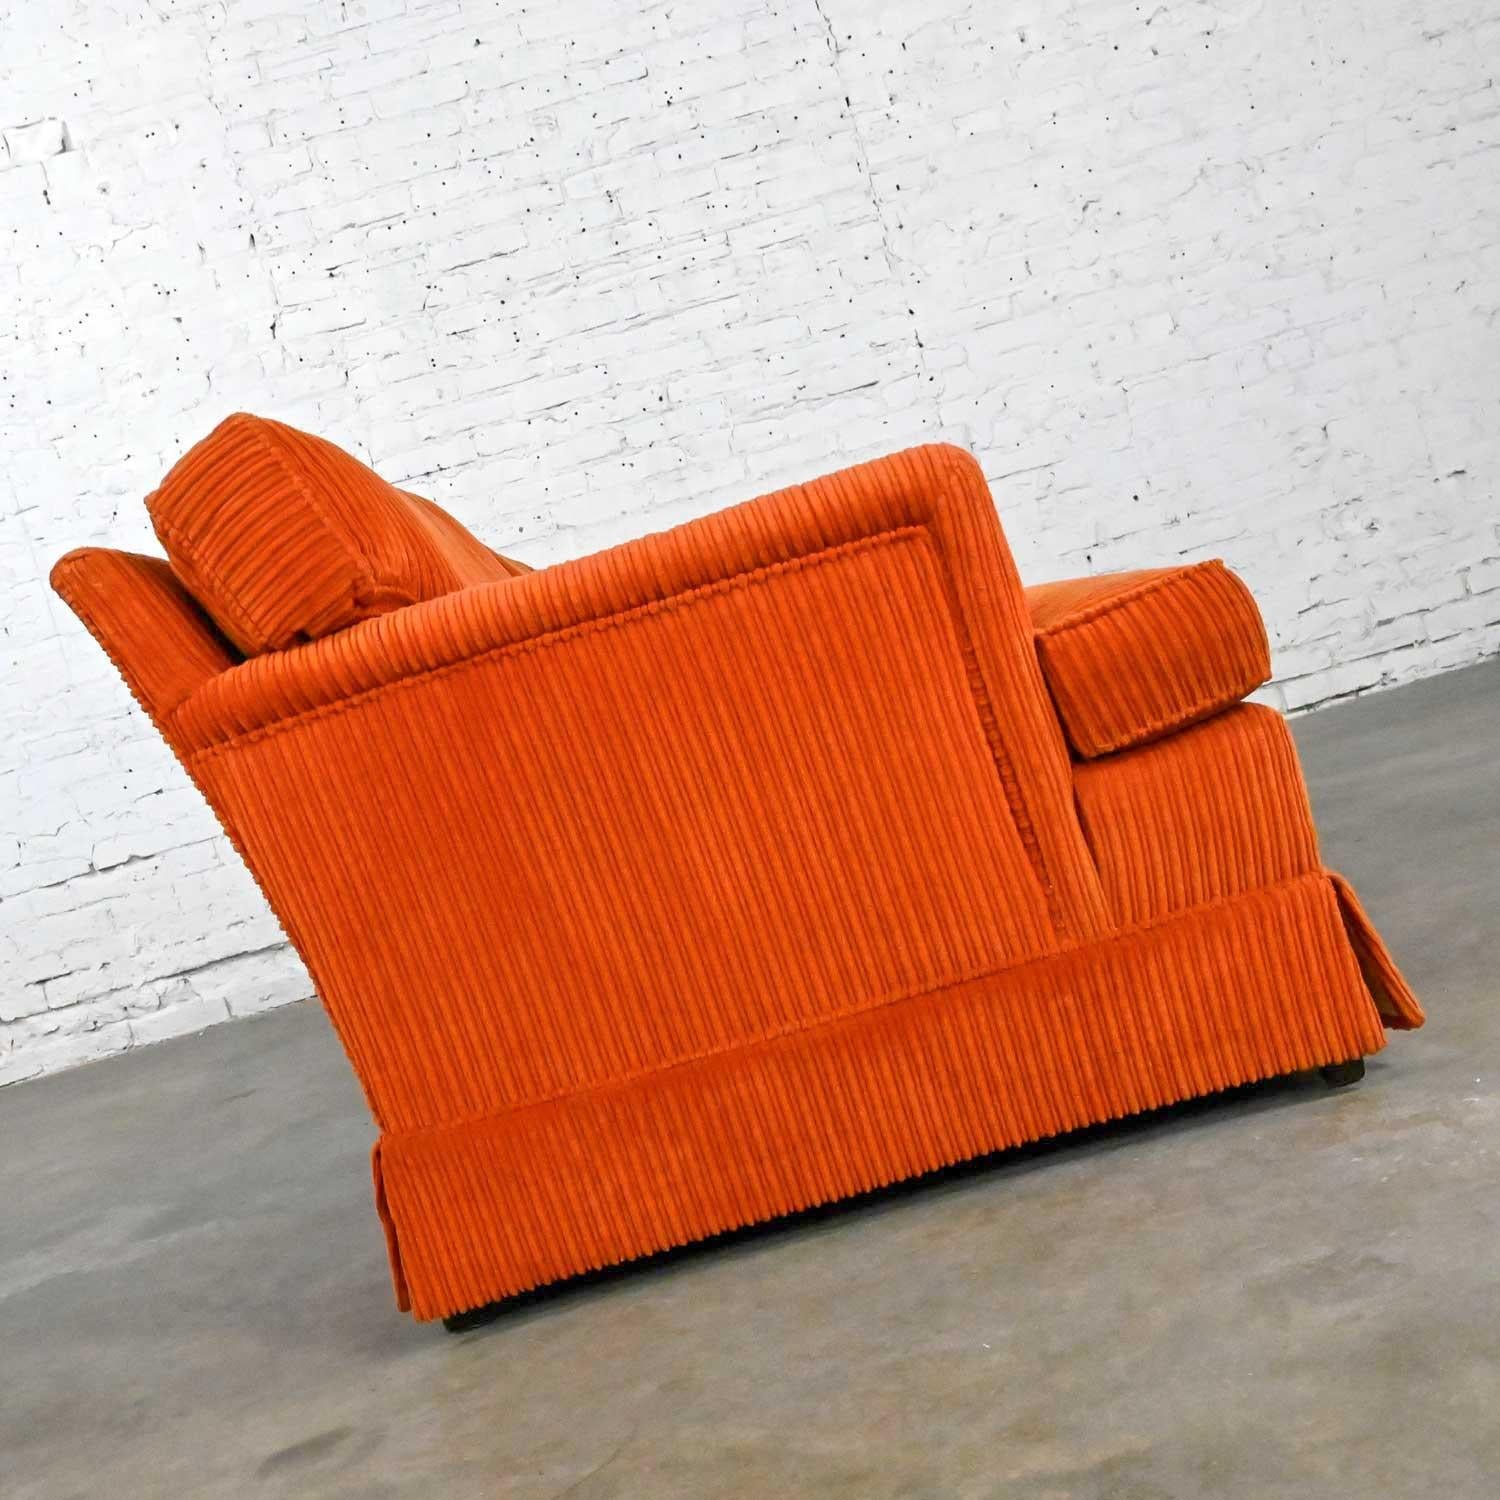 Late 20th Century Vintage MCM to Modern Lawson Style Orange Wide Wale Corduroy Sofa by Drexel